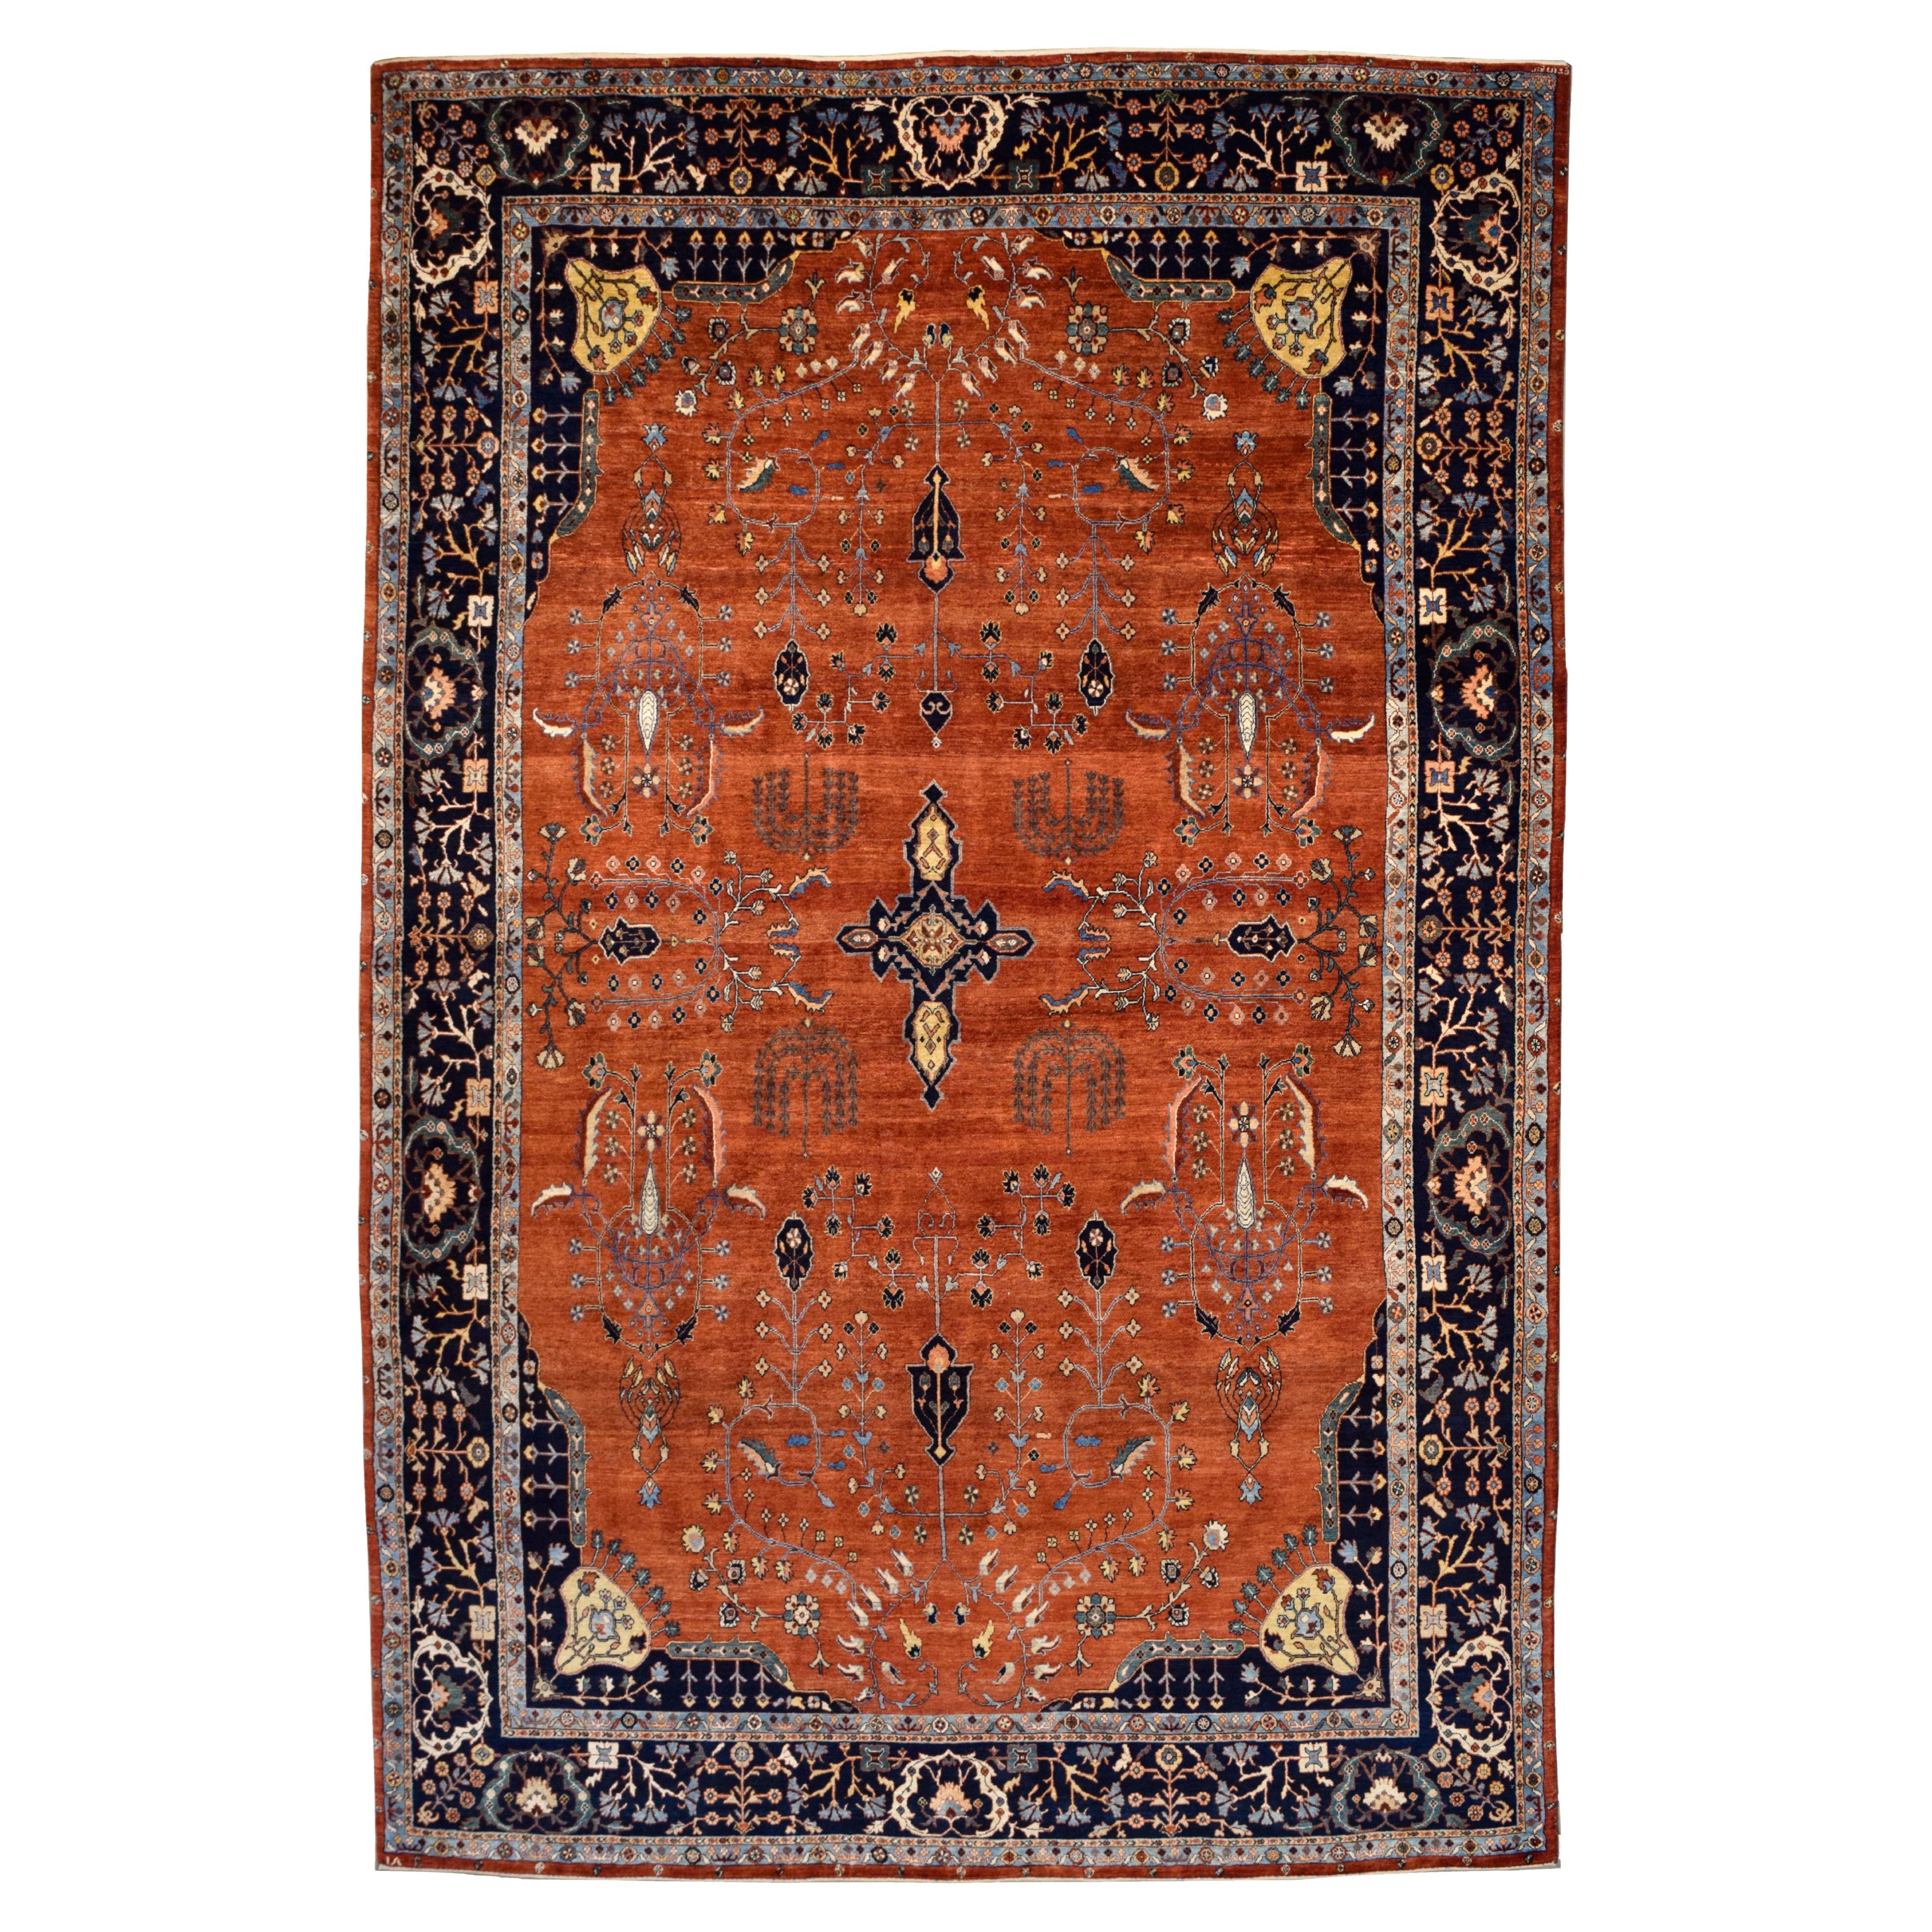 Vintage Hand-Knotted Mohajeran Sarouk Persian Carpet, Wool, Red, 9' x 12'